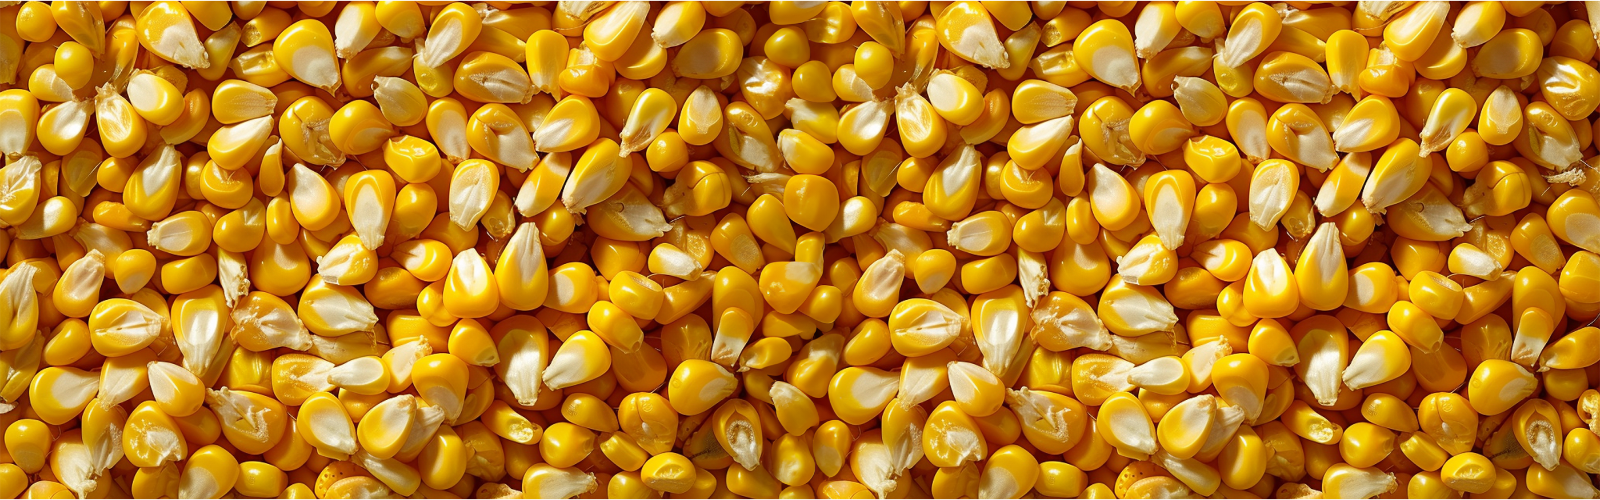 A close up image of corn kernels.